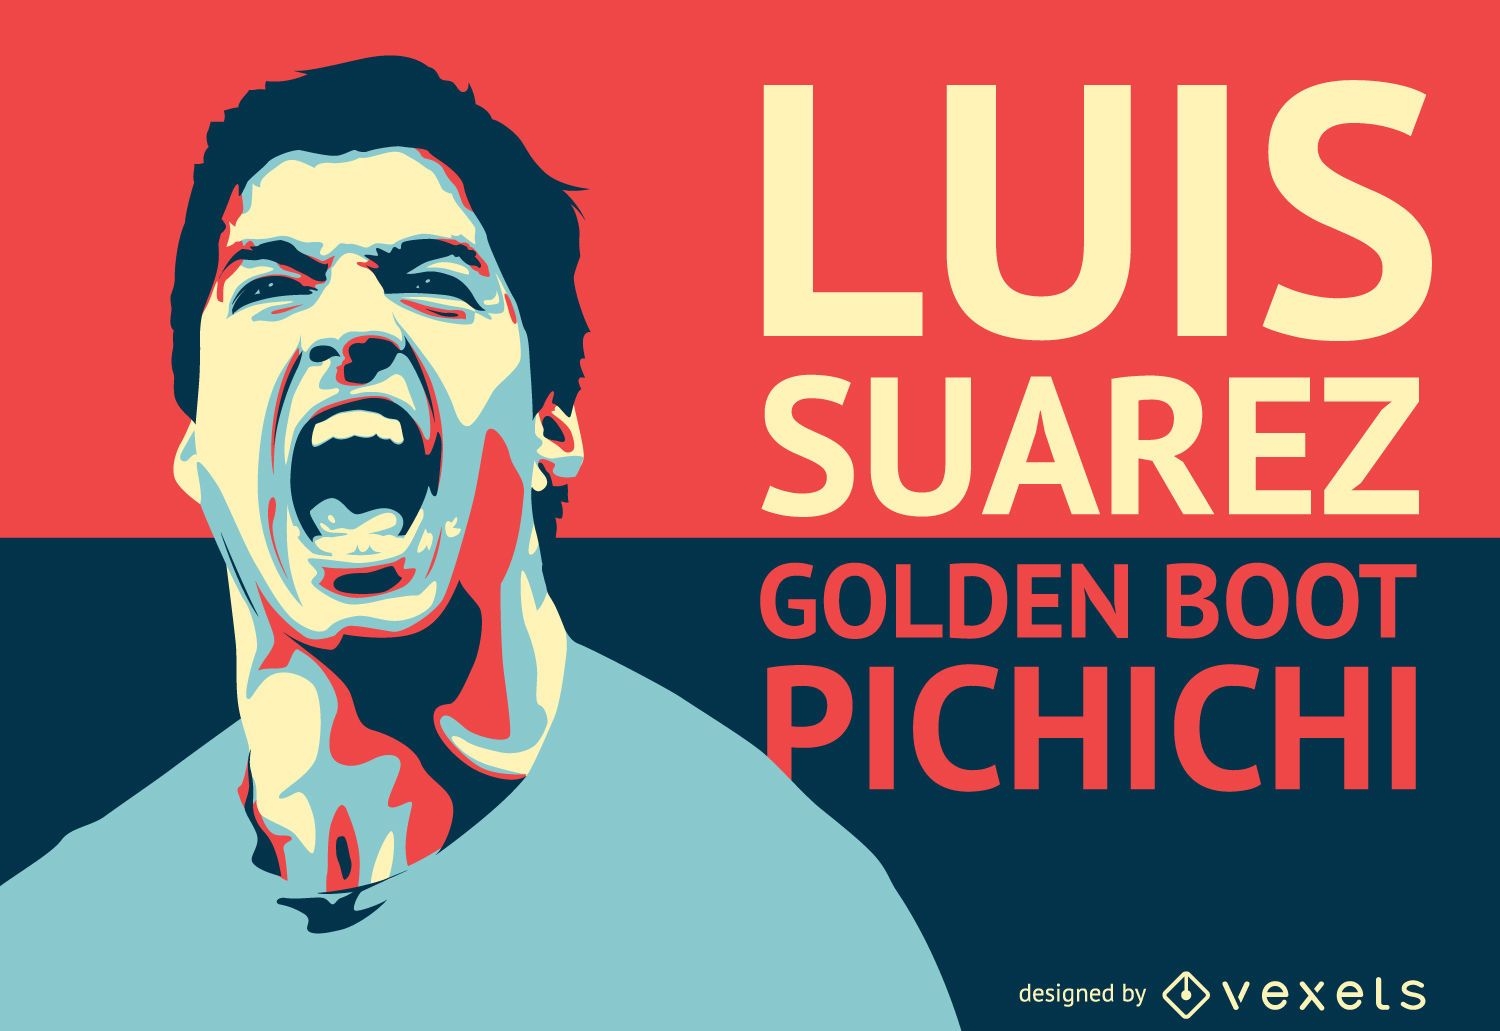 Luis Suarez football player illustration